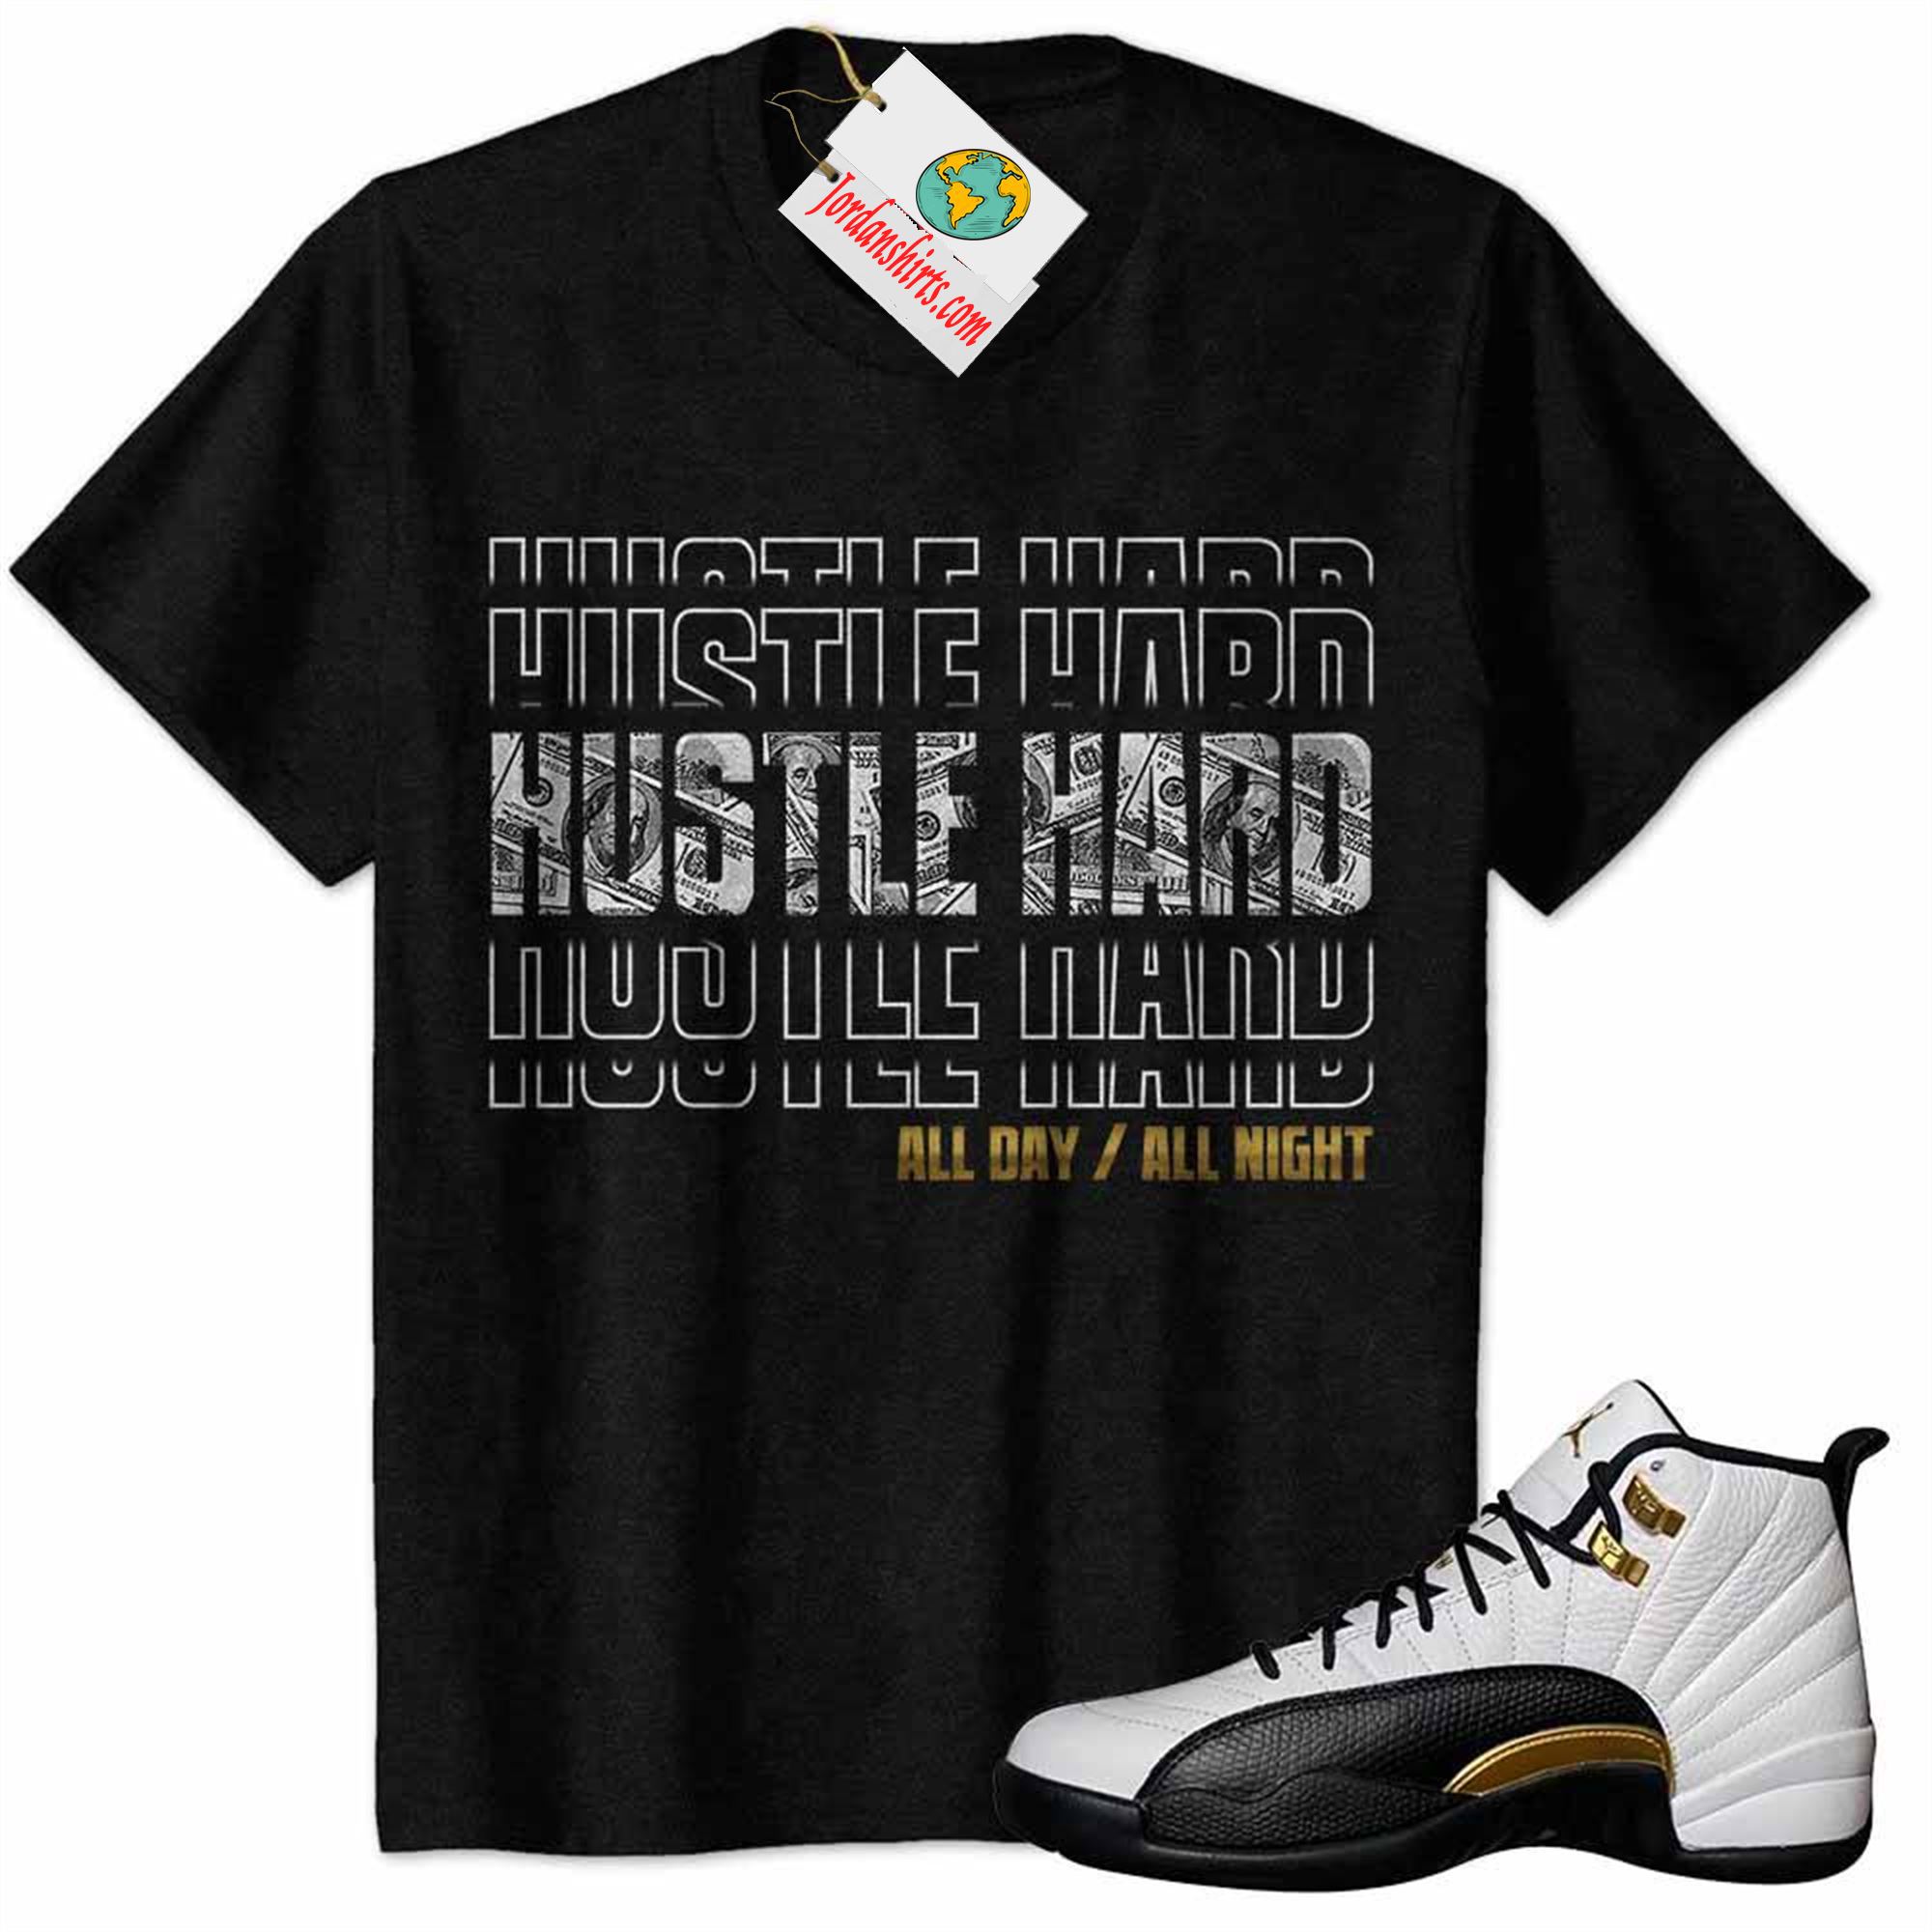 Jordan 12 Shirt, Hustle Hard All Day All Night Dollar Money Black Air Jordan 12 Royalty 12s Plus Size Up To 5xl